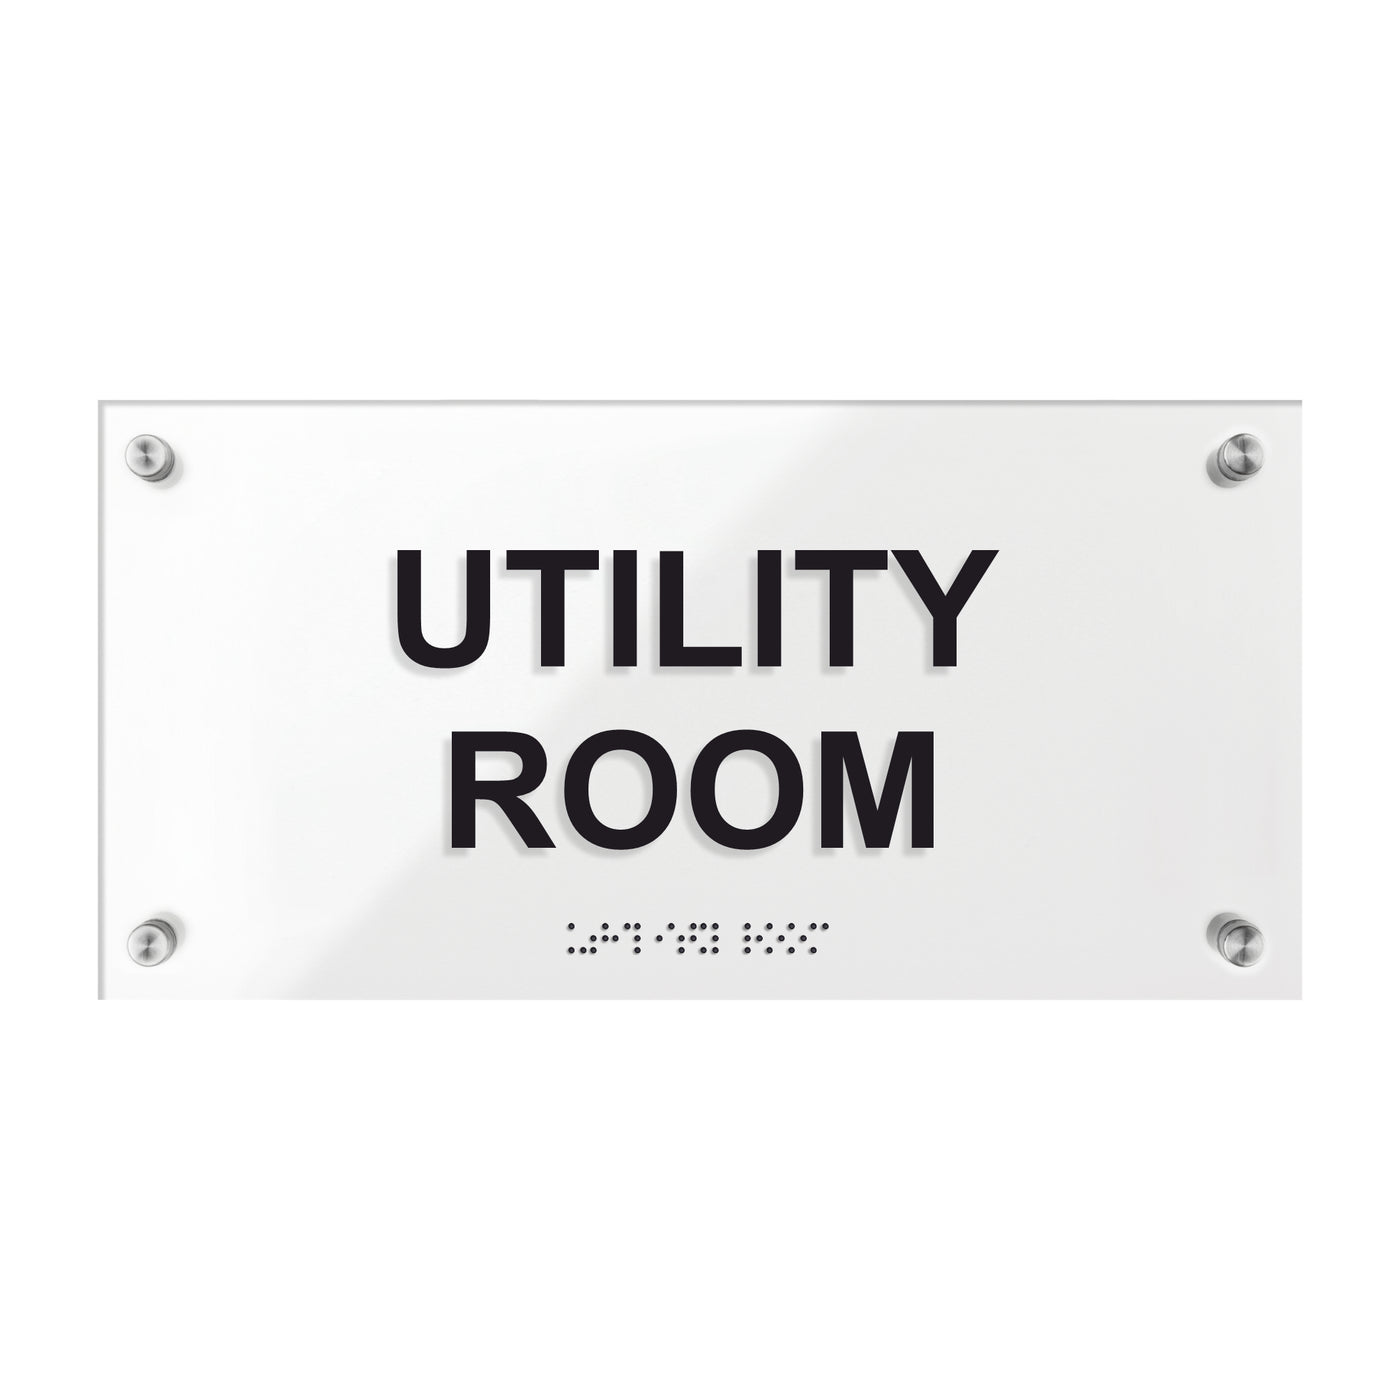 Utility Room Signs - Acrylic Door Plate "Classic" Design